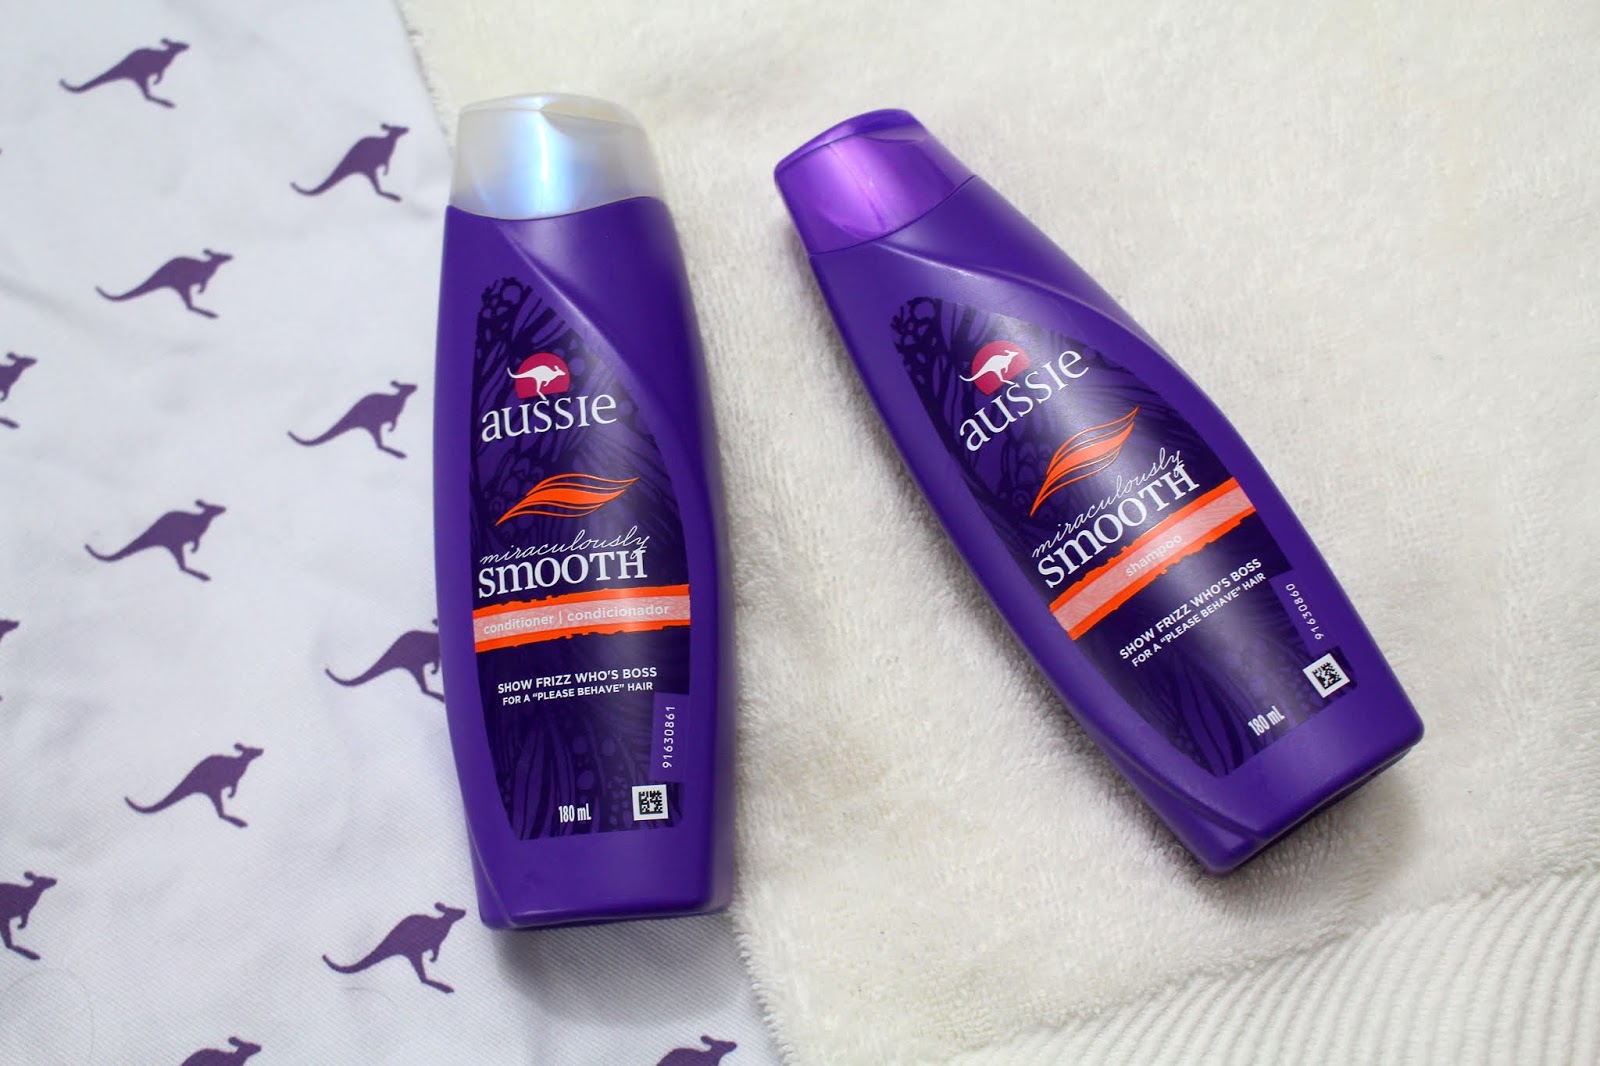 Resenha Aussie Miraculously Smooth Review Anadodia ana do dia cabelo shampoo condicionador 3 minutos milagrosos